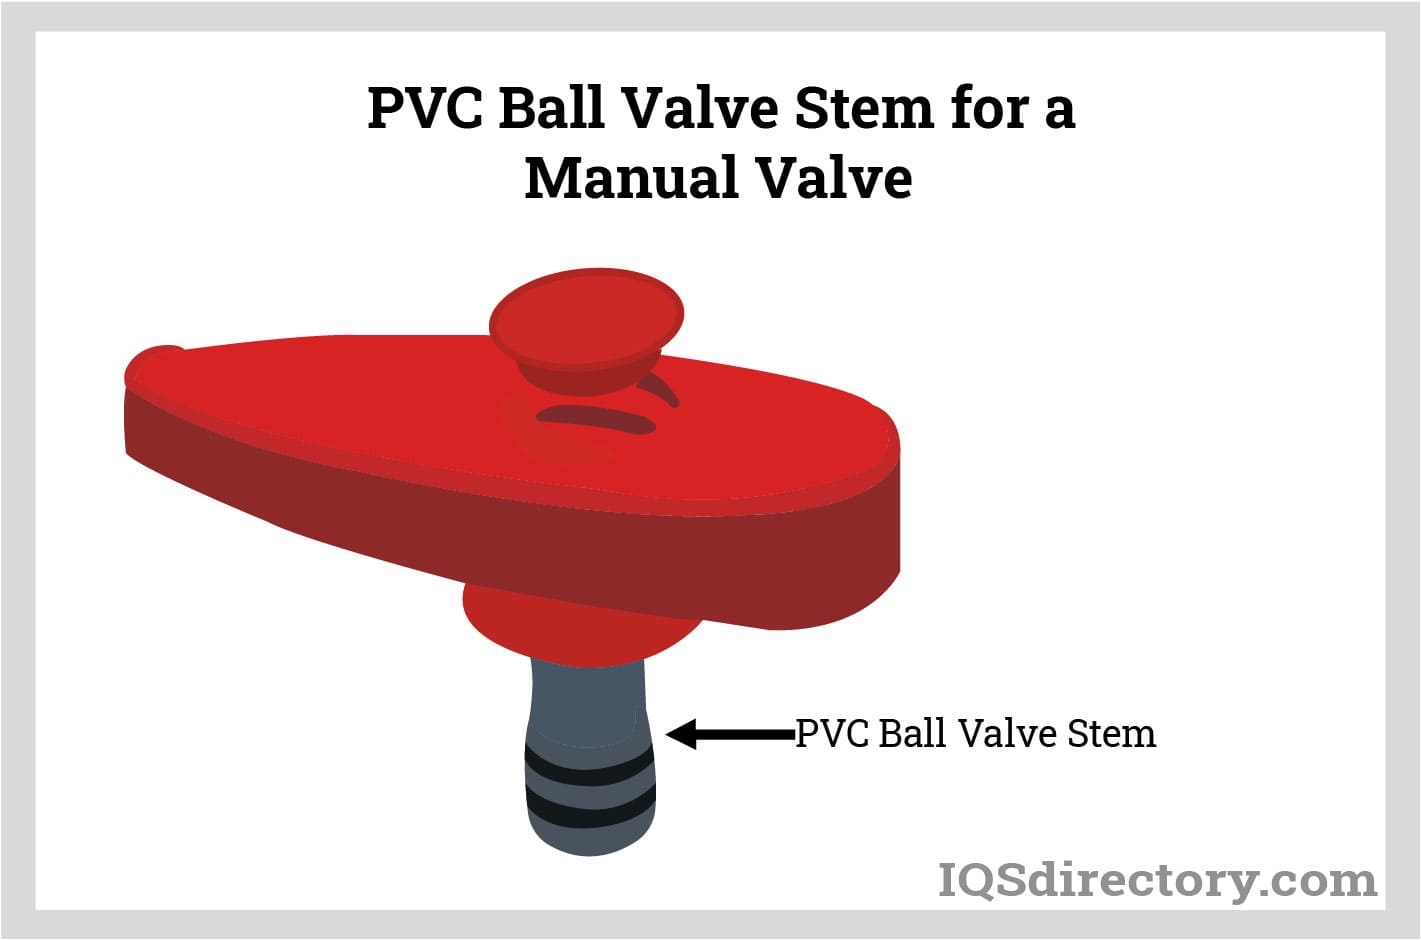 PVC Ball Valve Stem for a Manual Valve